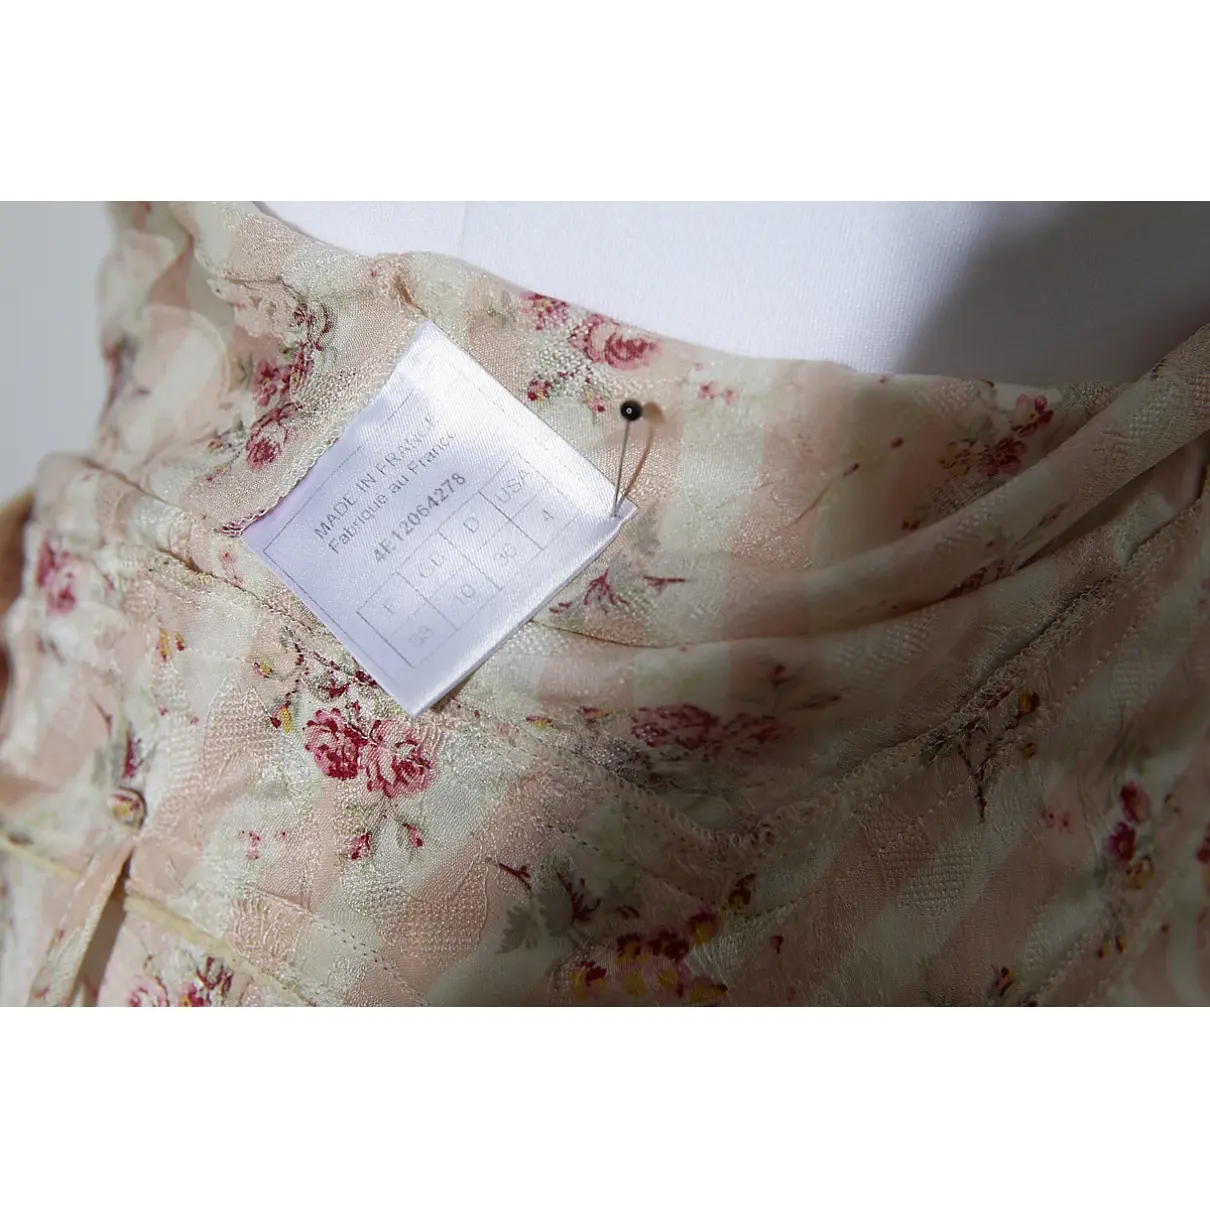 Silk mid-length dress John Galliano - Vintage